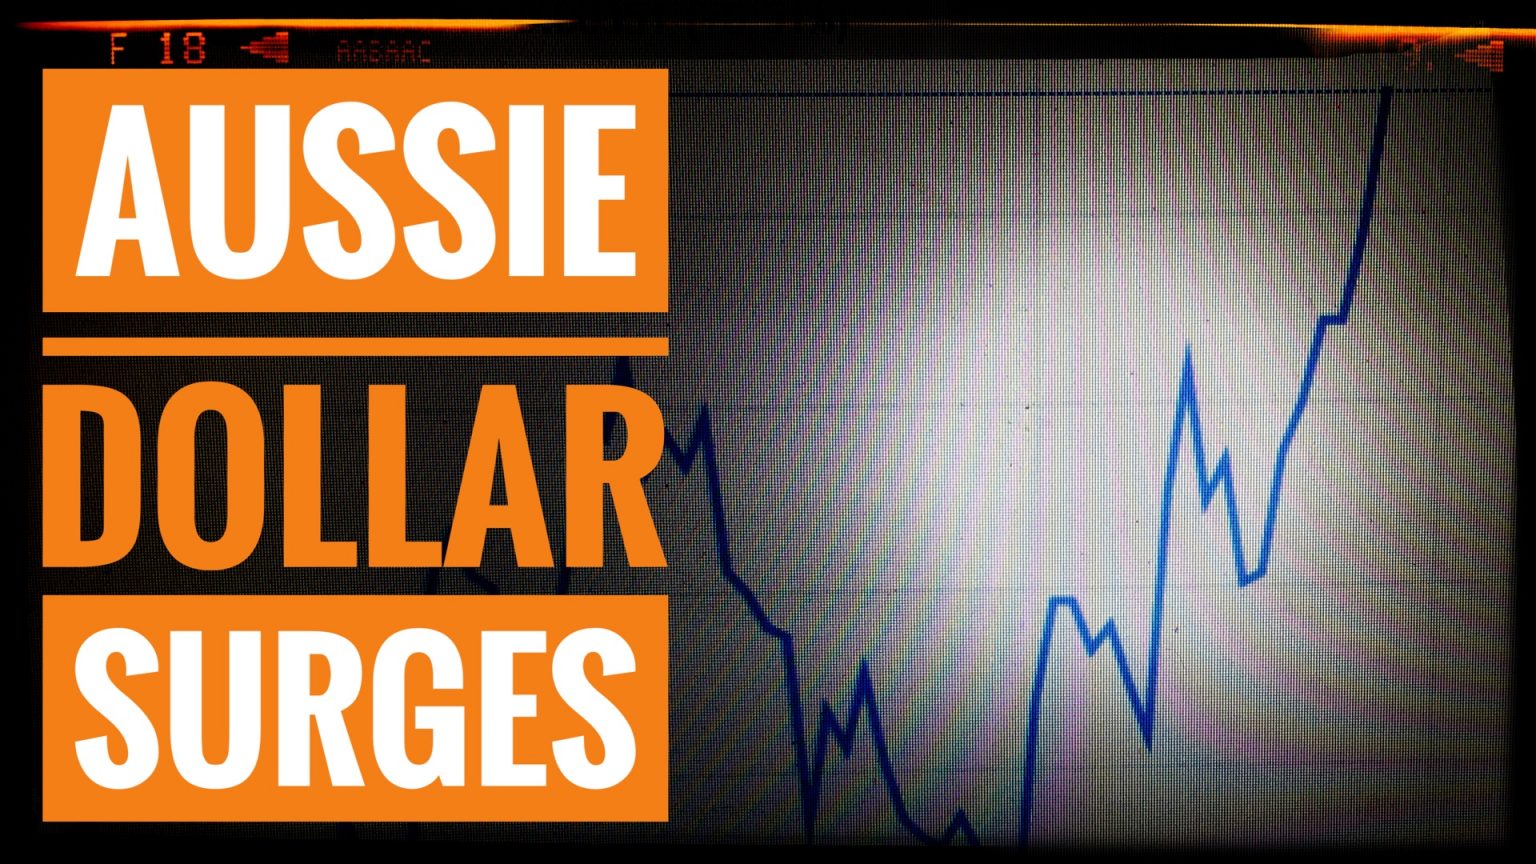 The Australian Dollar Surges Heise Says